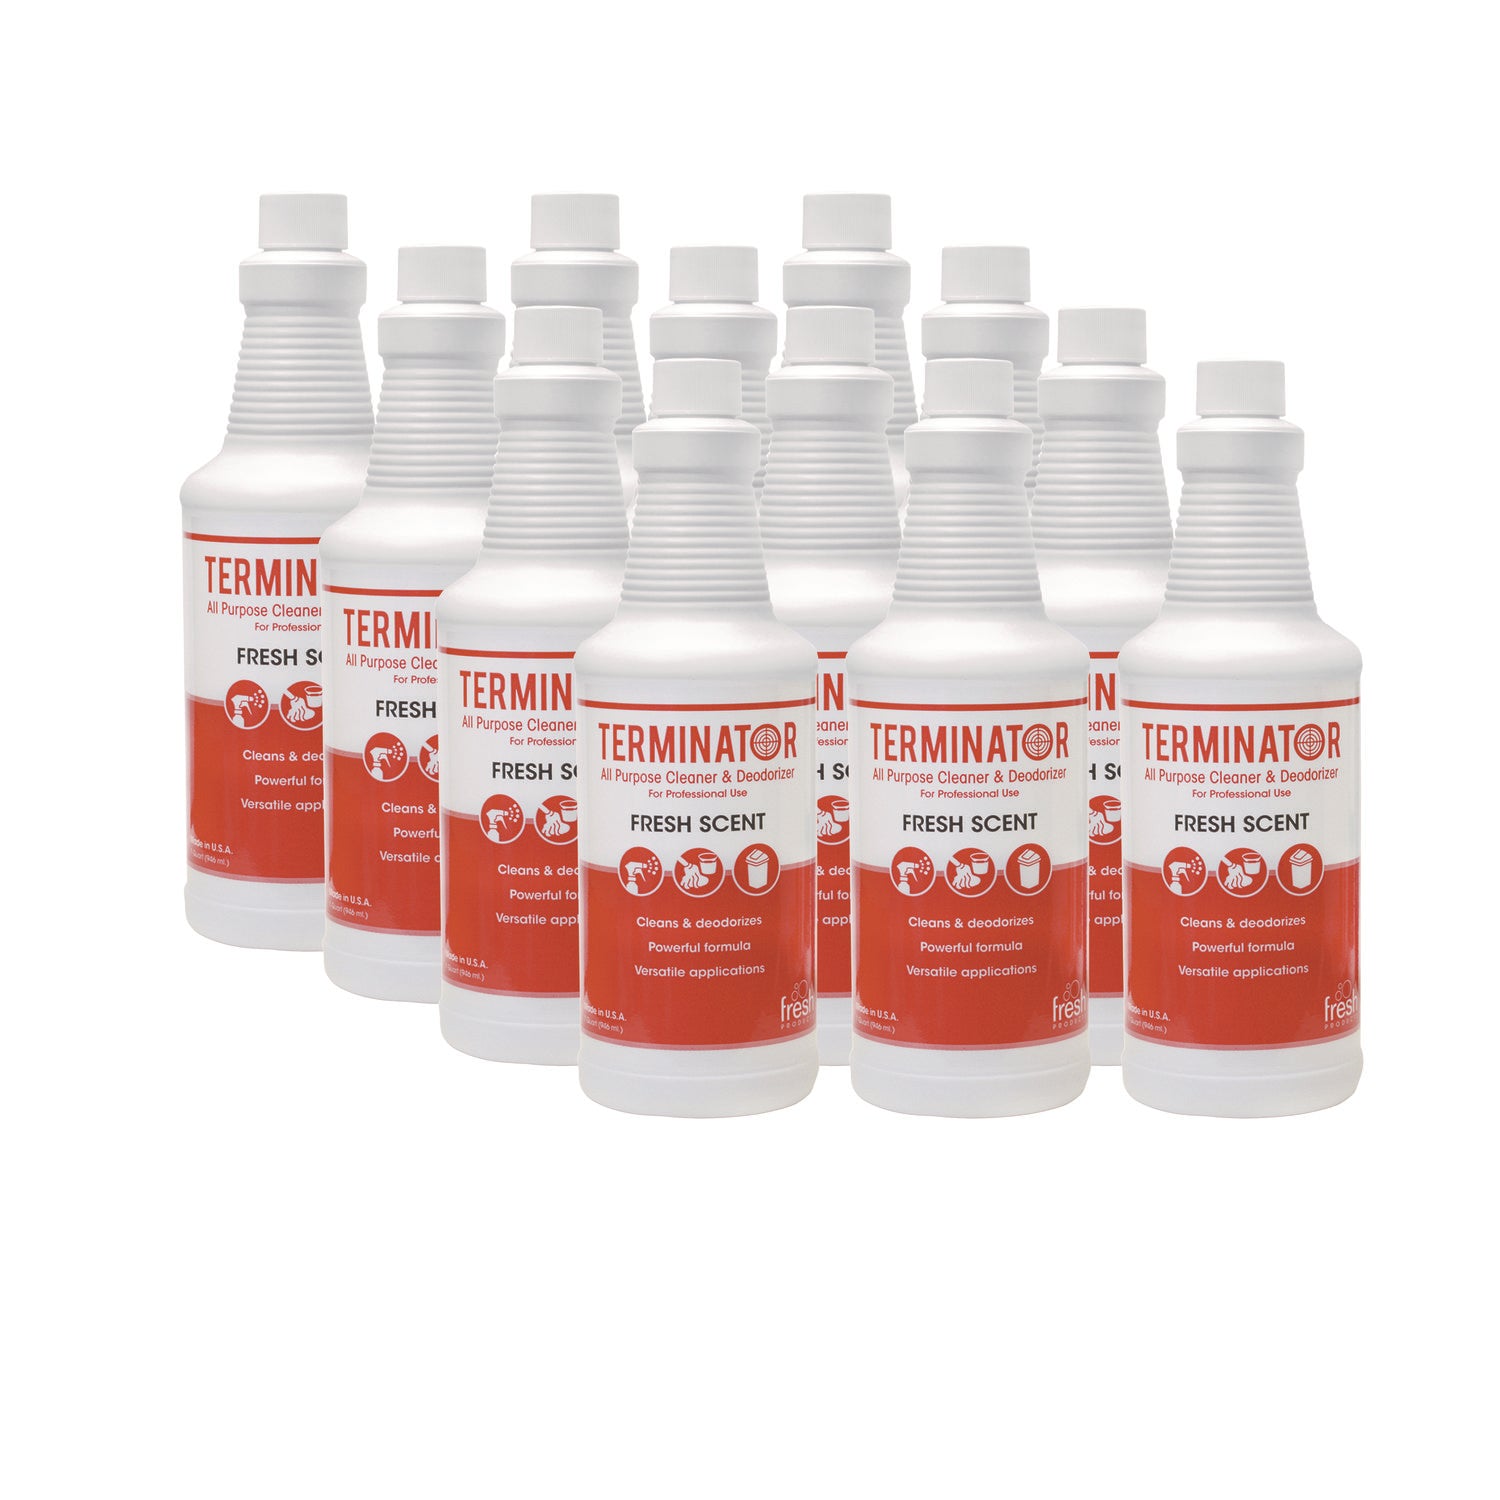 Terminator All-Purpose Cleaner/Deodorizer with (2) Trigger Sprayers, 32 oz Bottles, 12/Carton - 1